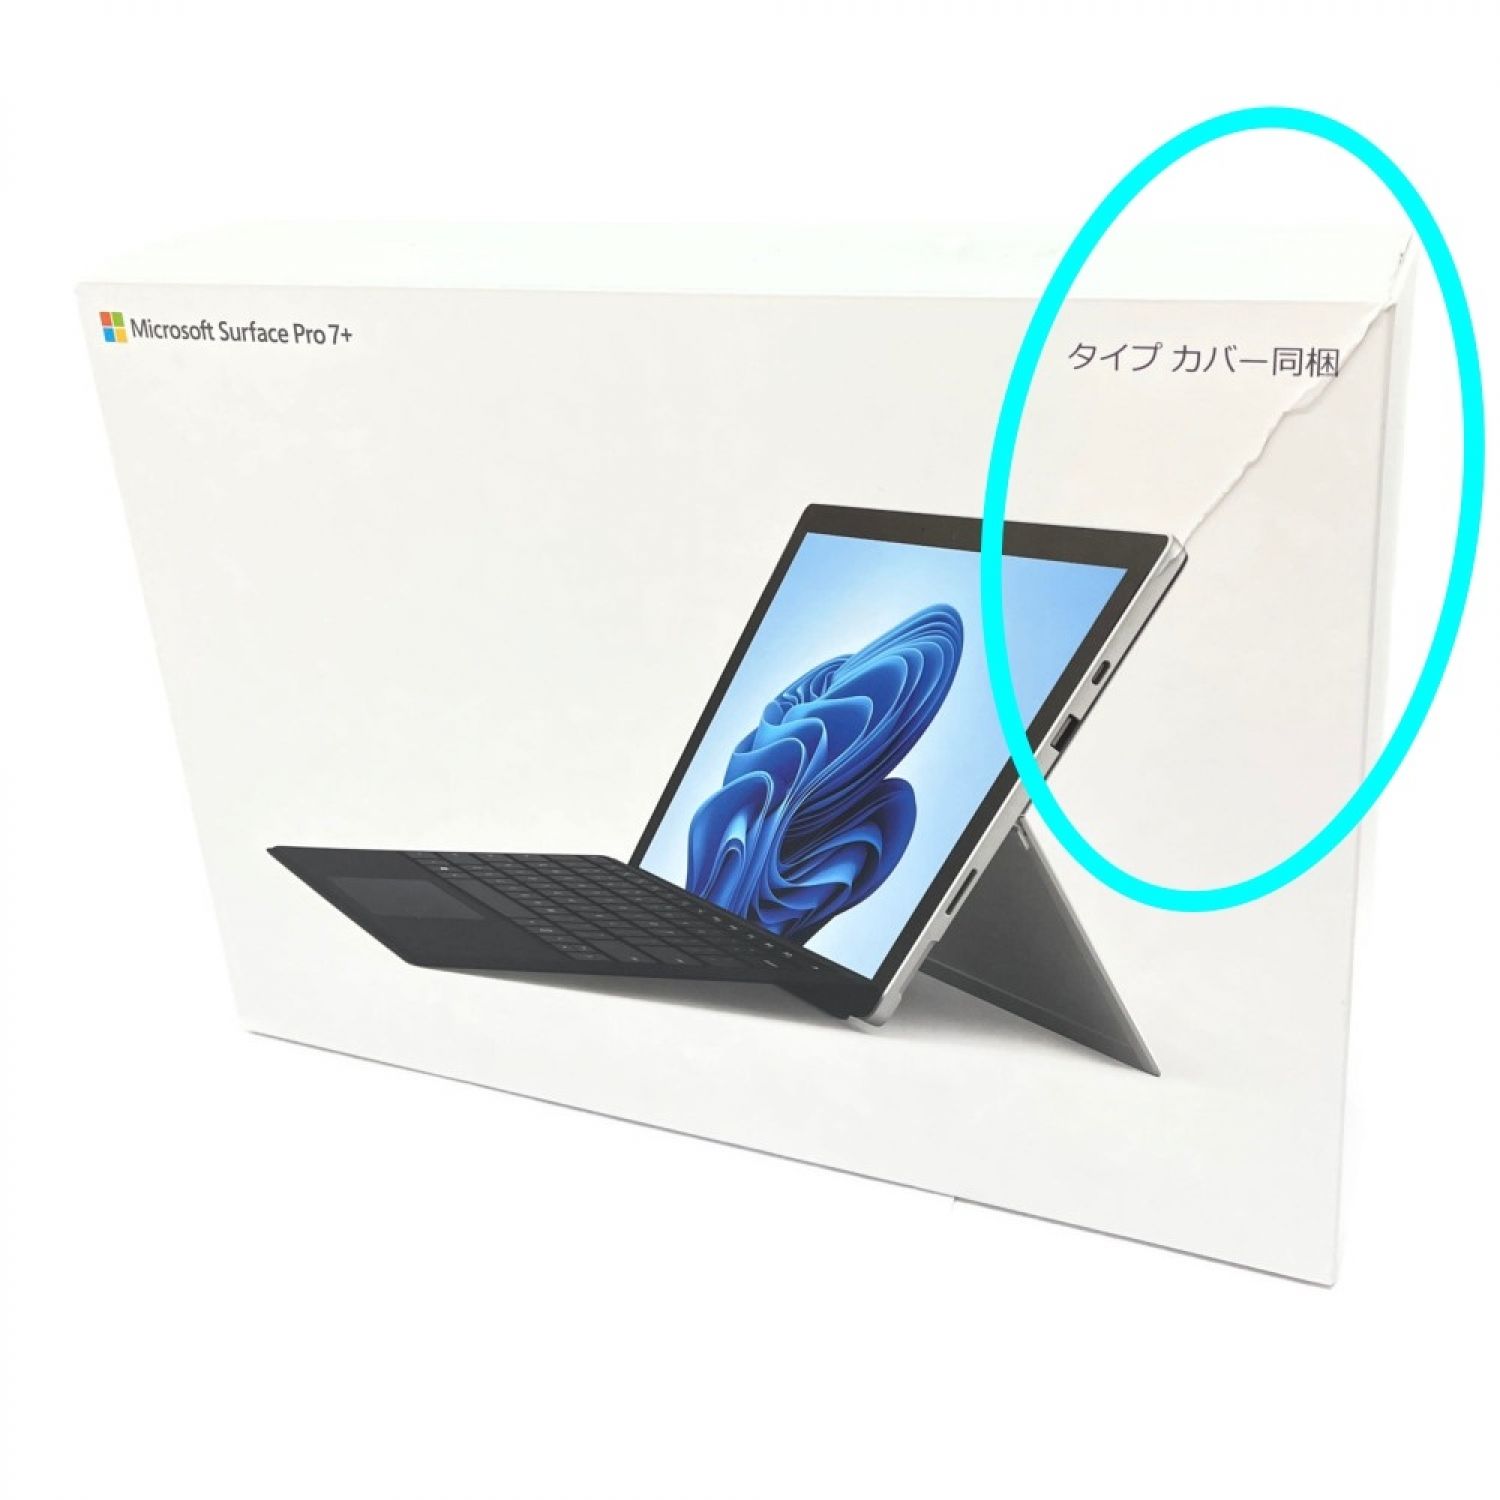 Microsoft Surface Pro7 タイプカバー同梱 i5 128GB